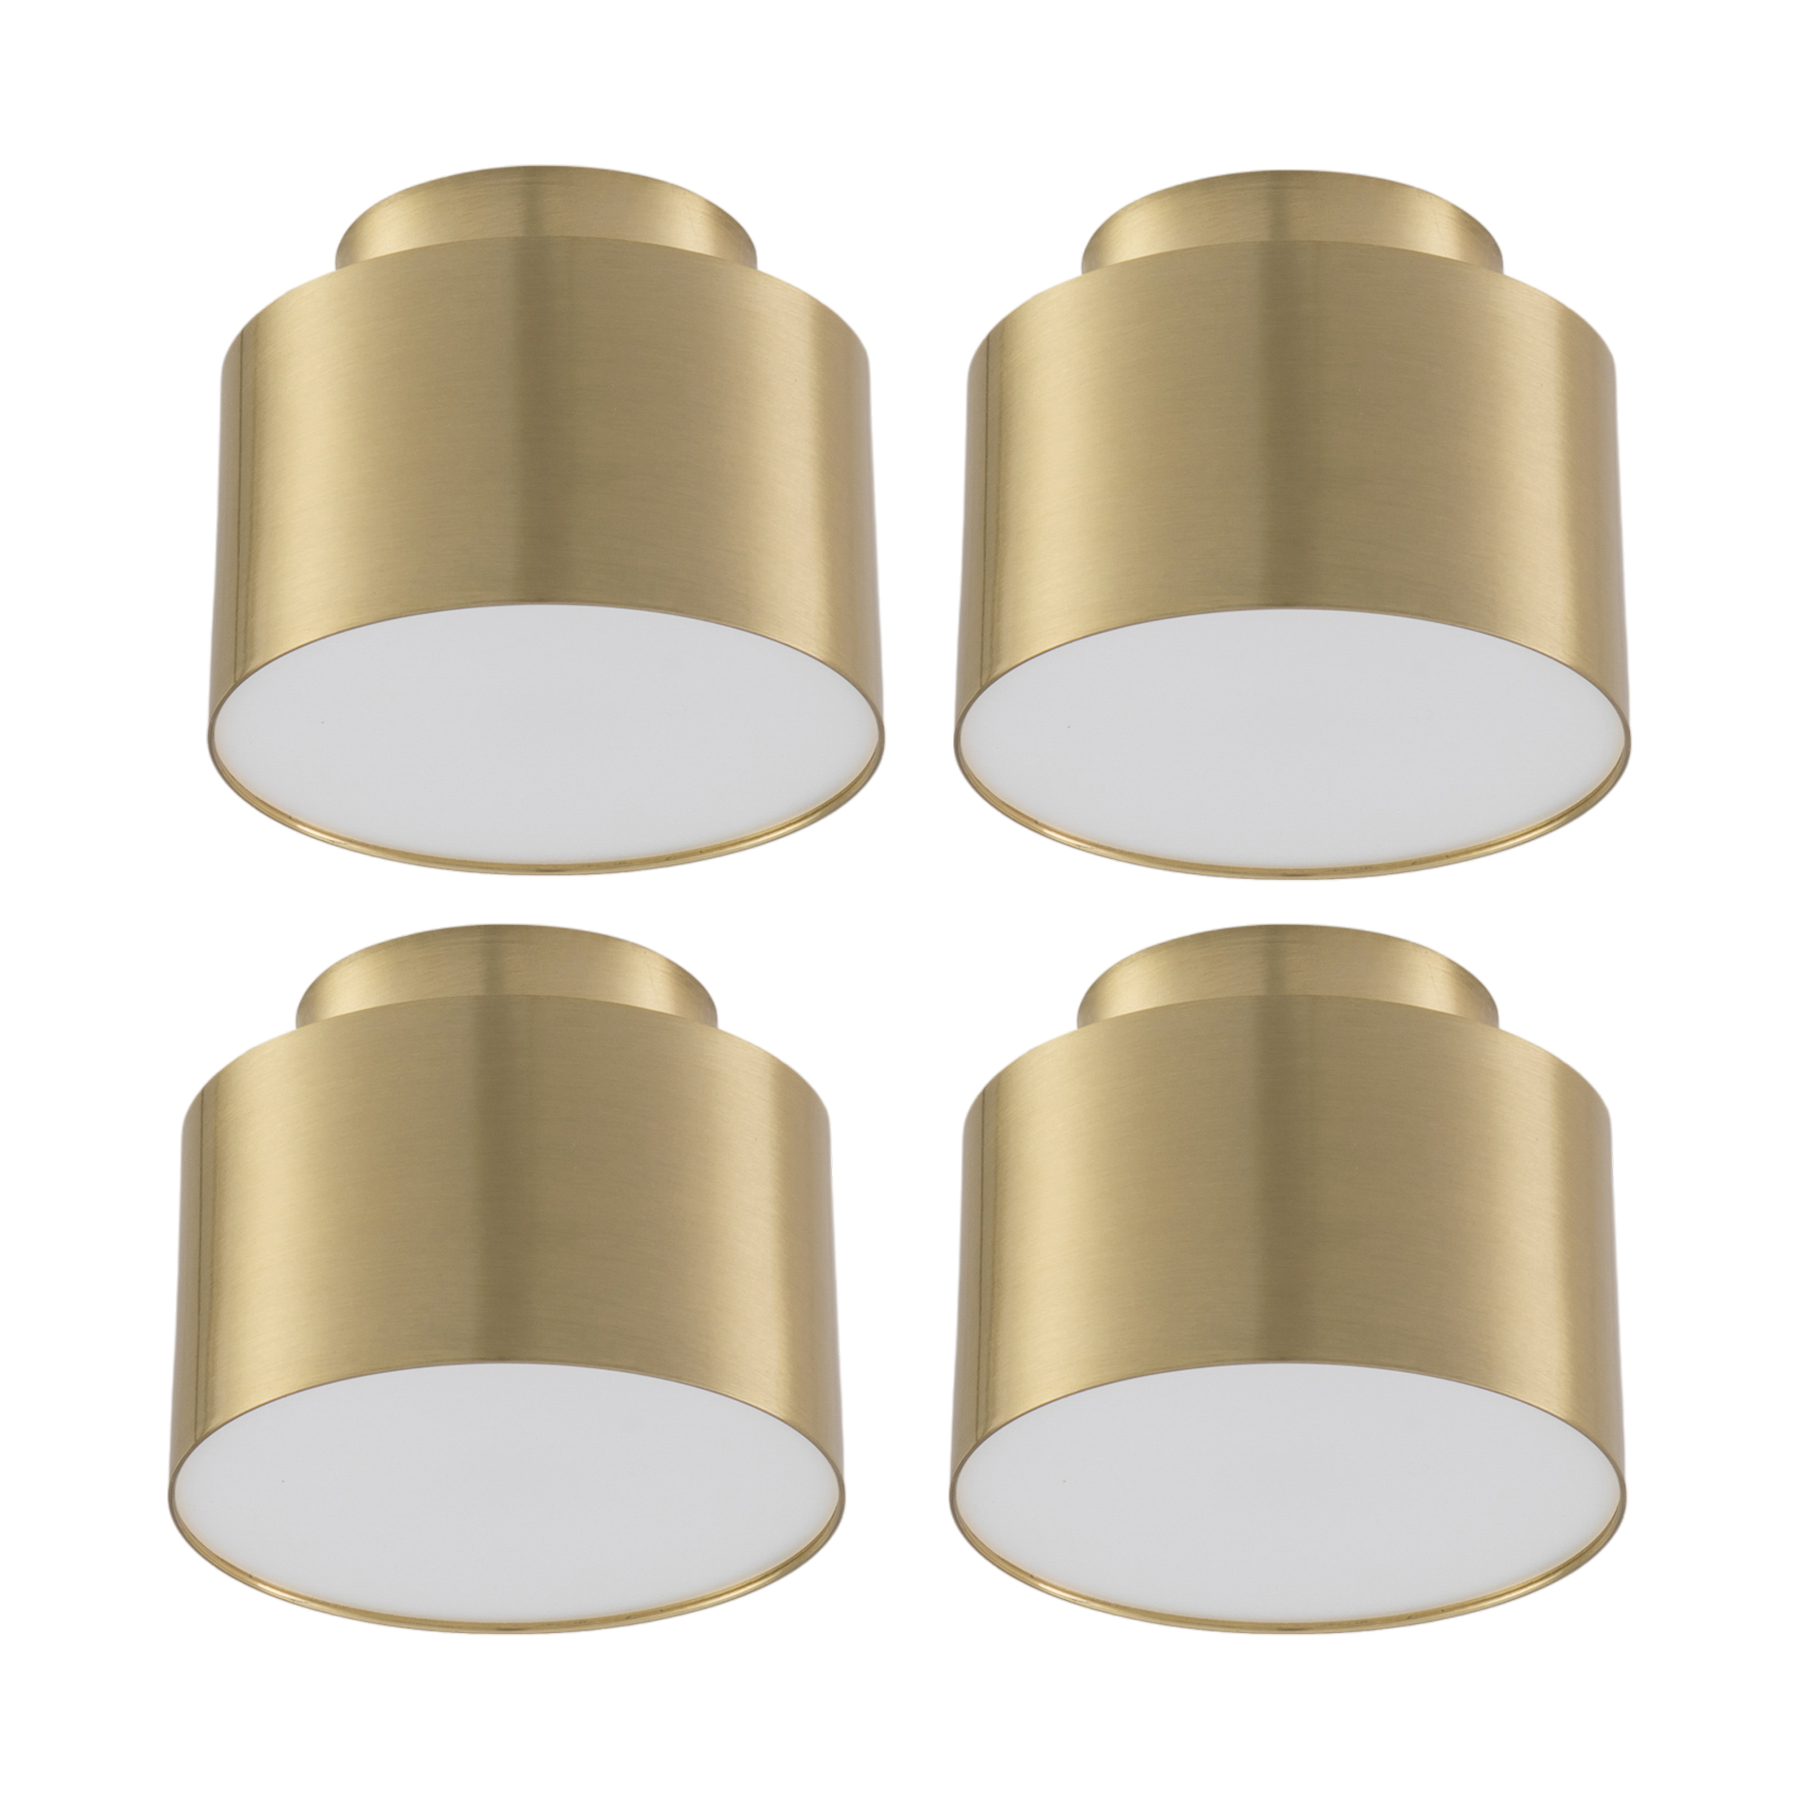 Lindby LED spotlight Nivoria, 11 x 8.8 cm, gold-coloured, set of 4